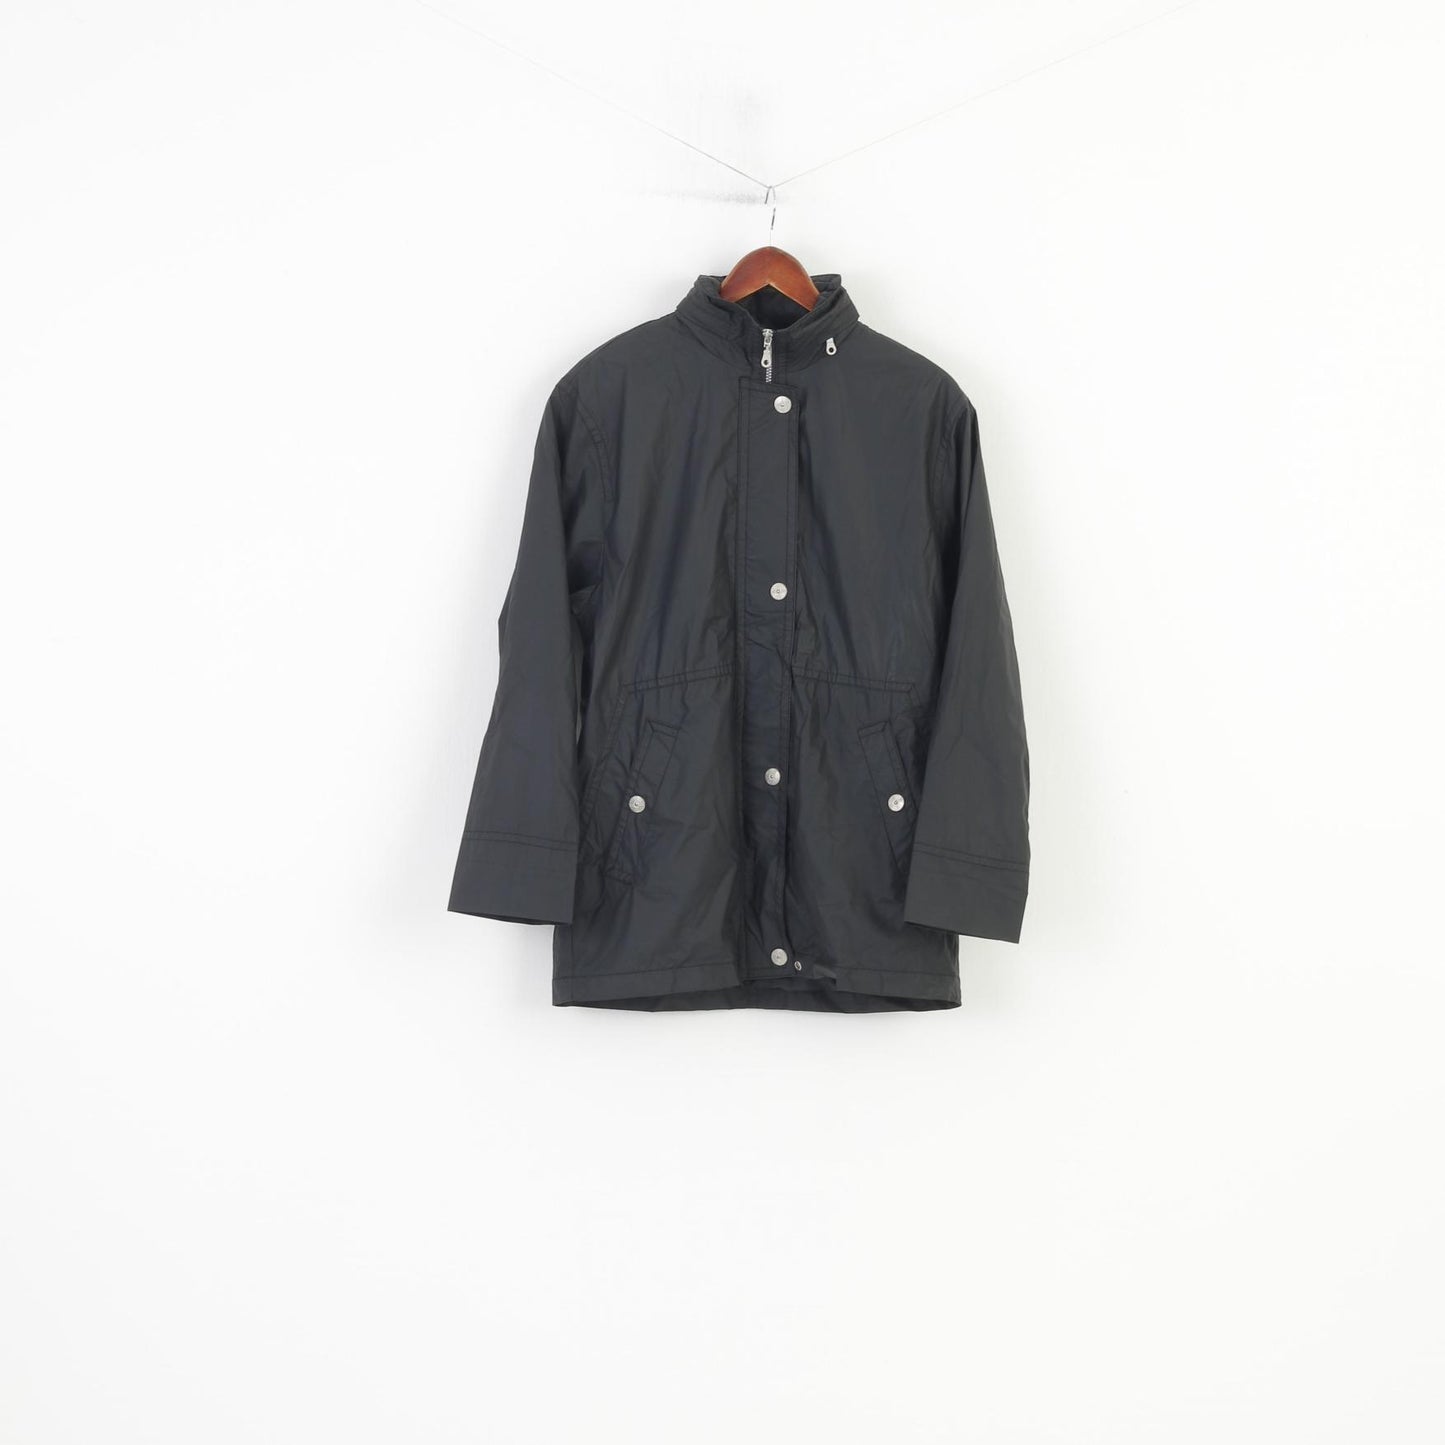 John F.Gee Women XL Jacket Black  Collar Light Parka  Hood Full Zipper Waterproof Vintage Top